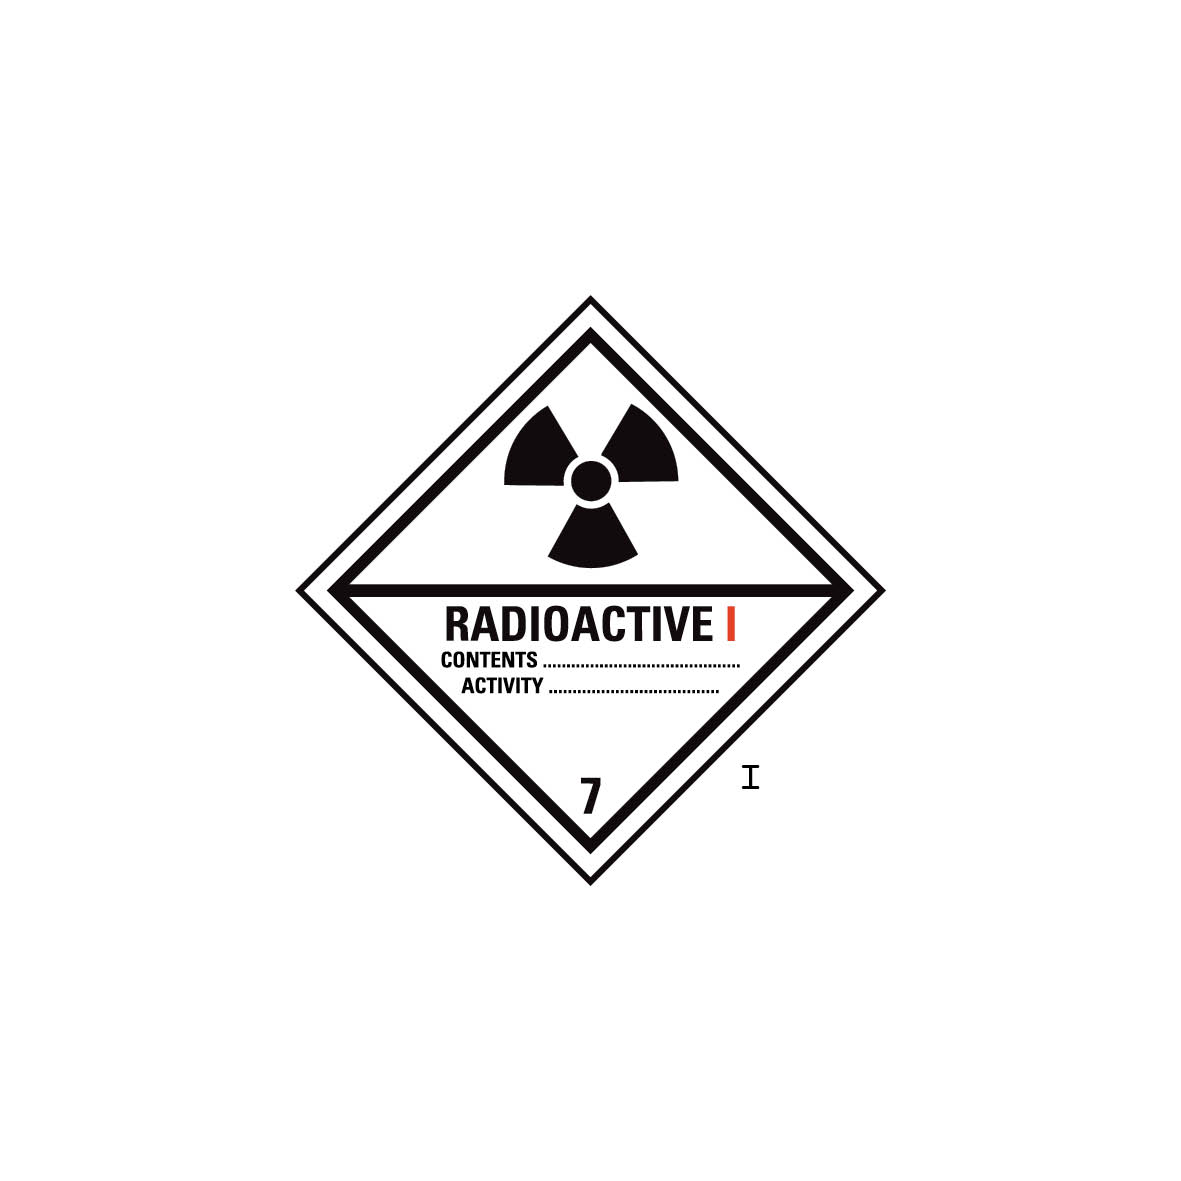 Gefahrgut Kl. 7, Radioactive I 5.0134